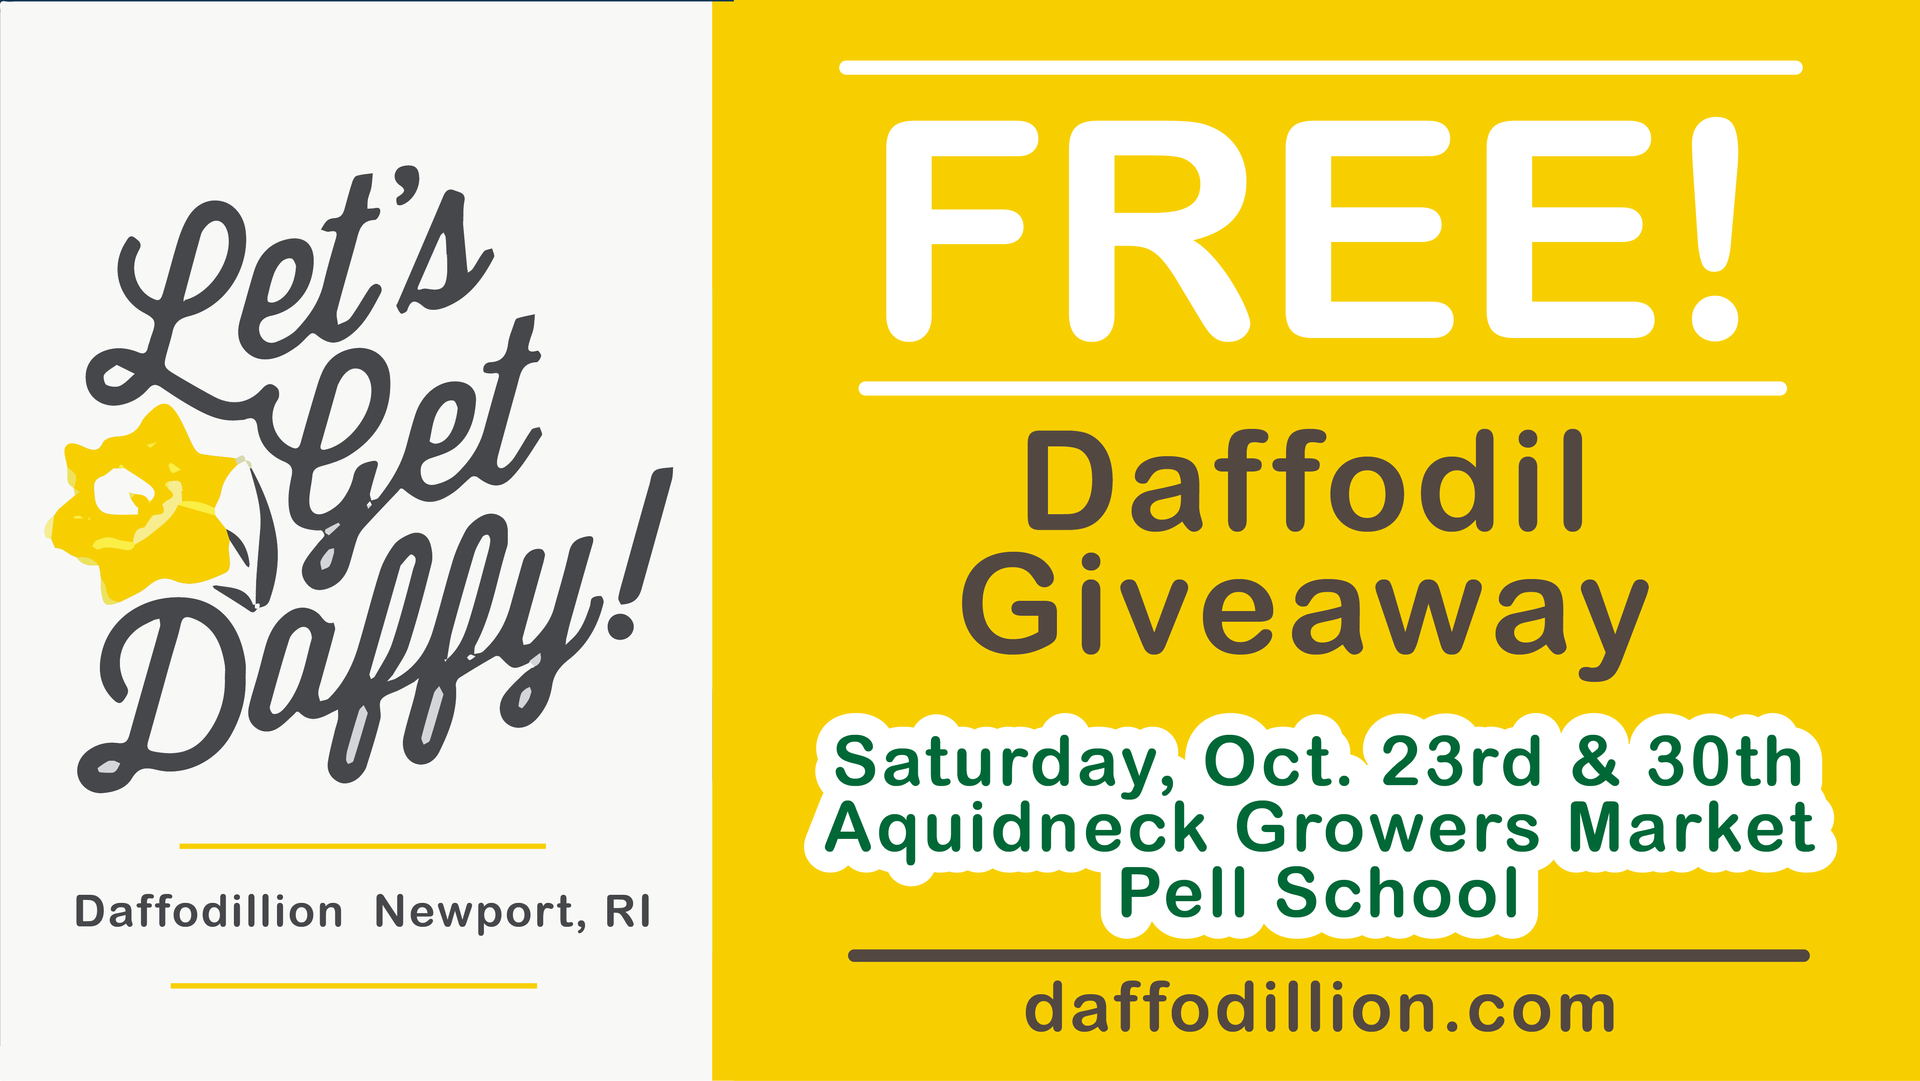 Newport in Bloom and Daffodillion will be distributing FREE “Dutch Master” daffodil bulbs